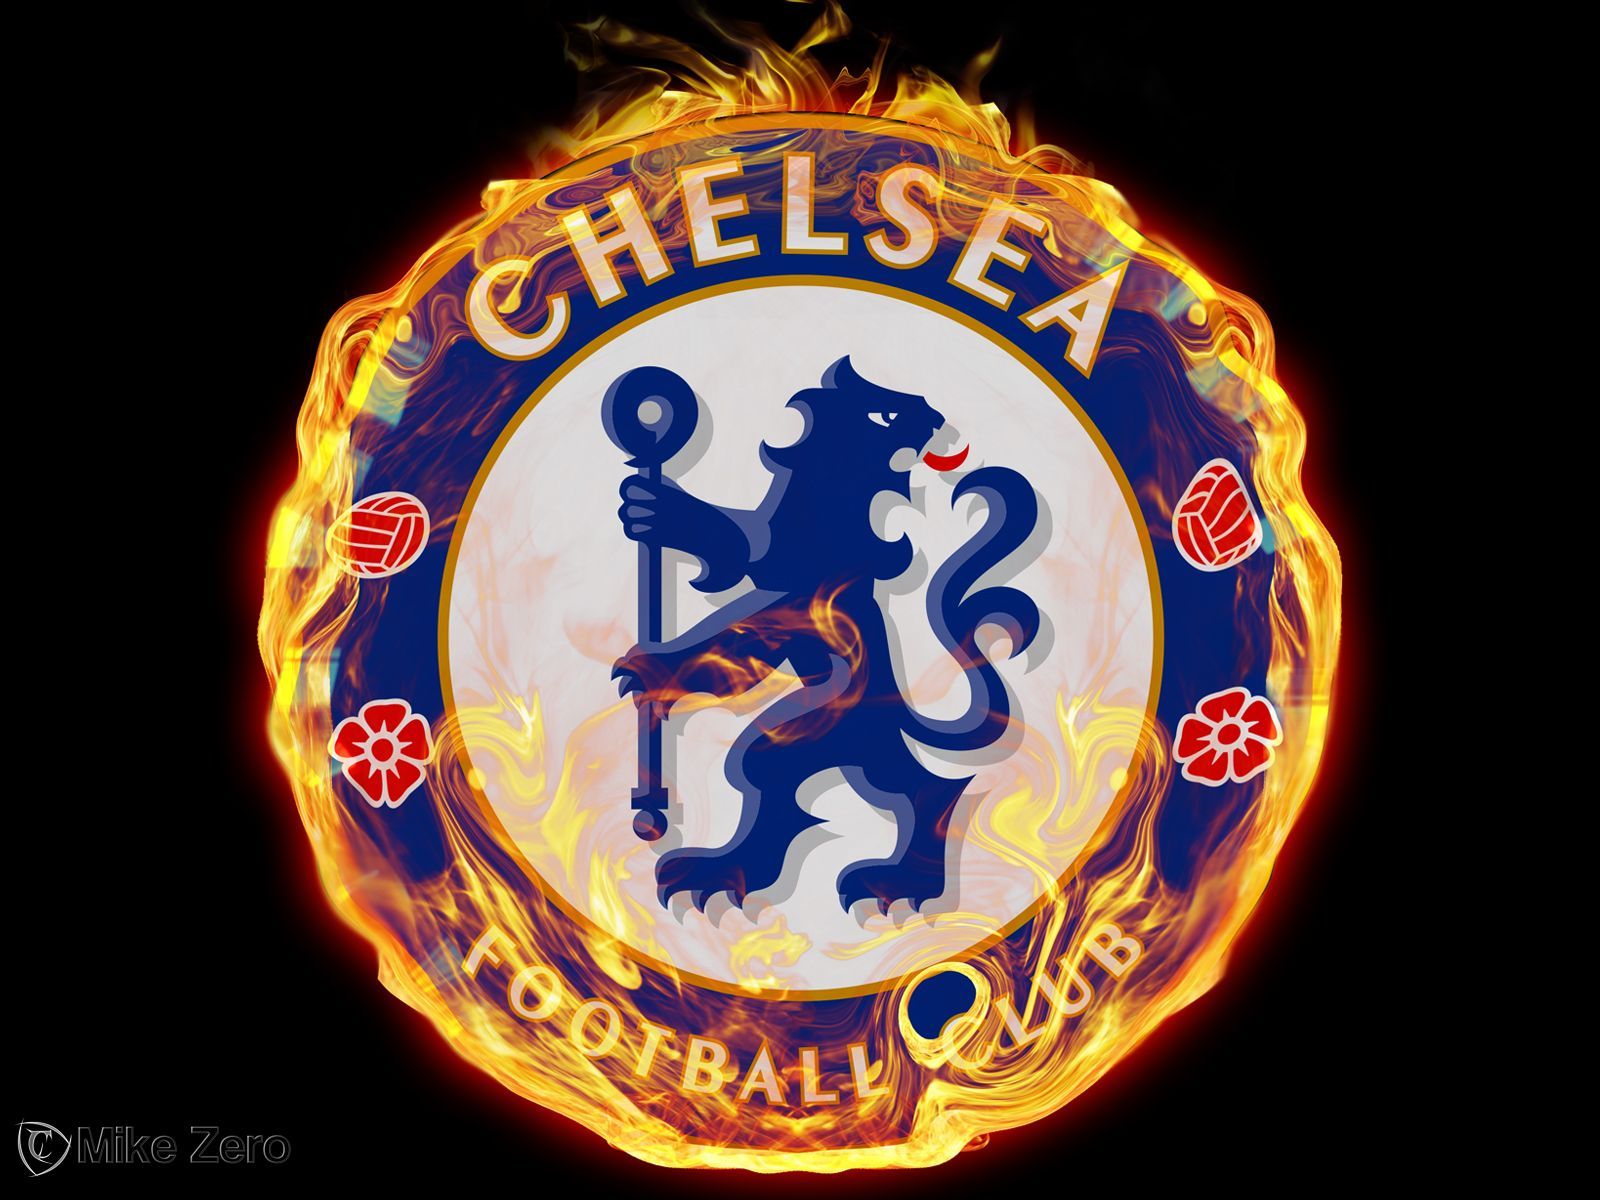 Download Chelsea Fc Logo Wallpaper | Full HD Wallpapers